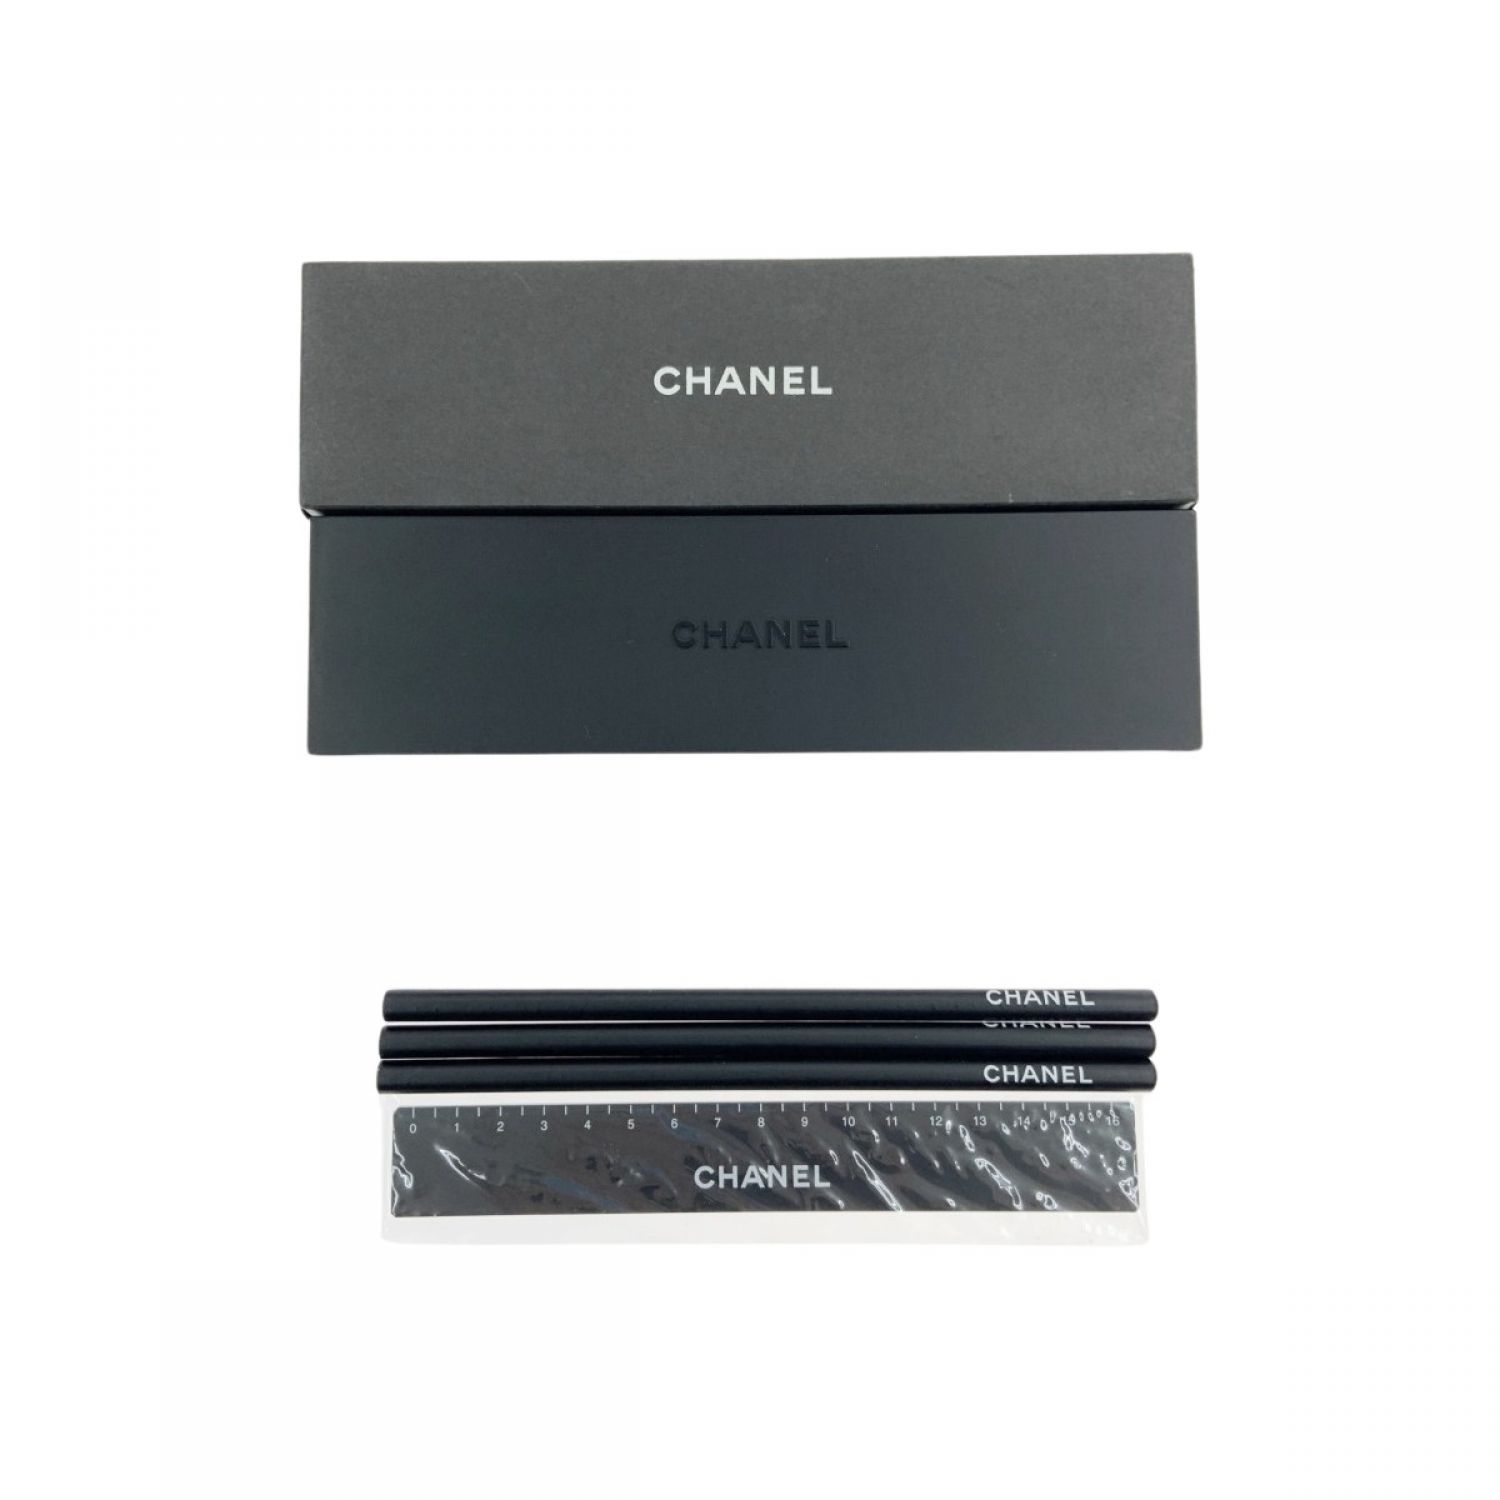 CHANEL シャネル ノベルティ ペンケース セット 鉛筆 定規 ブラック Sランク